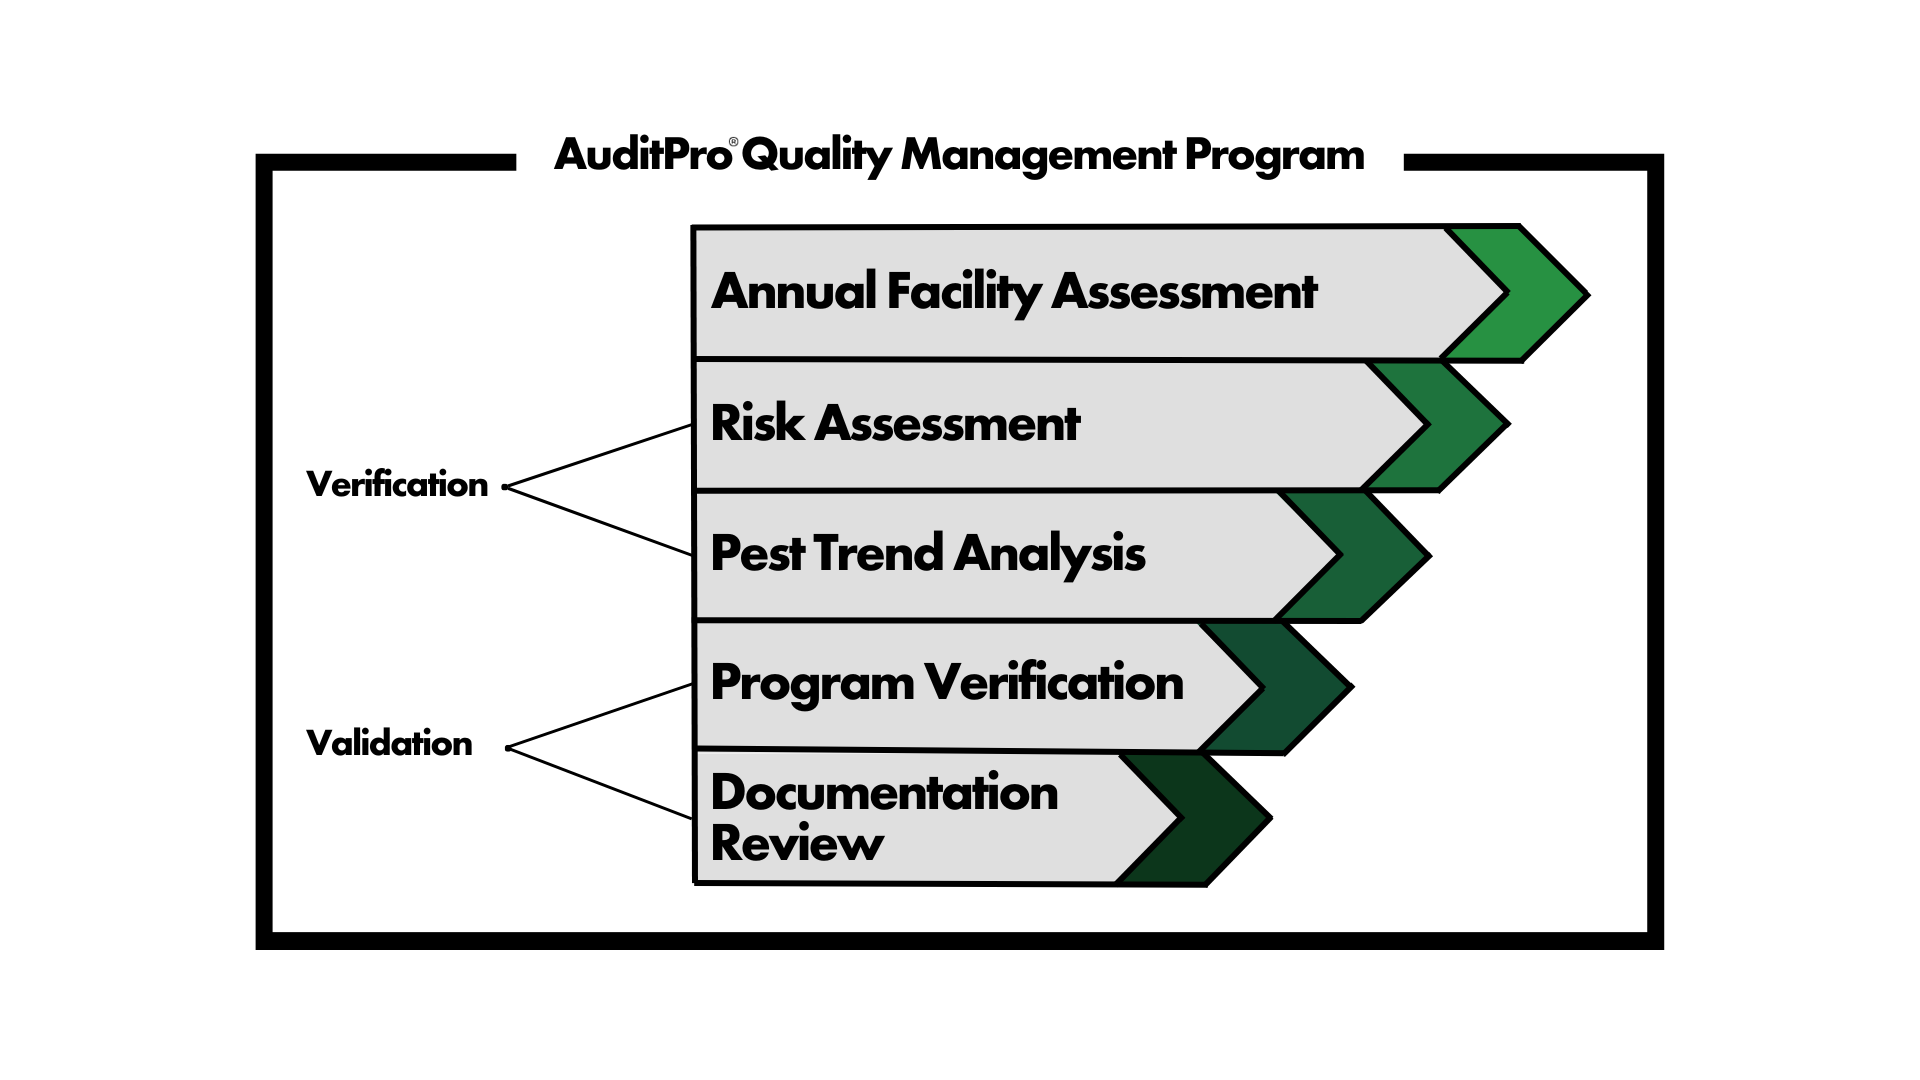 AuditPro Quality Management Program